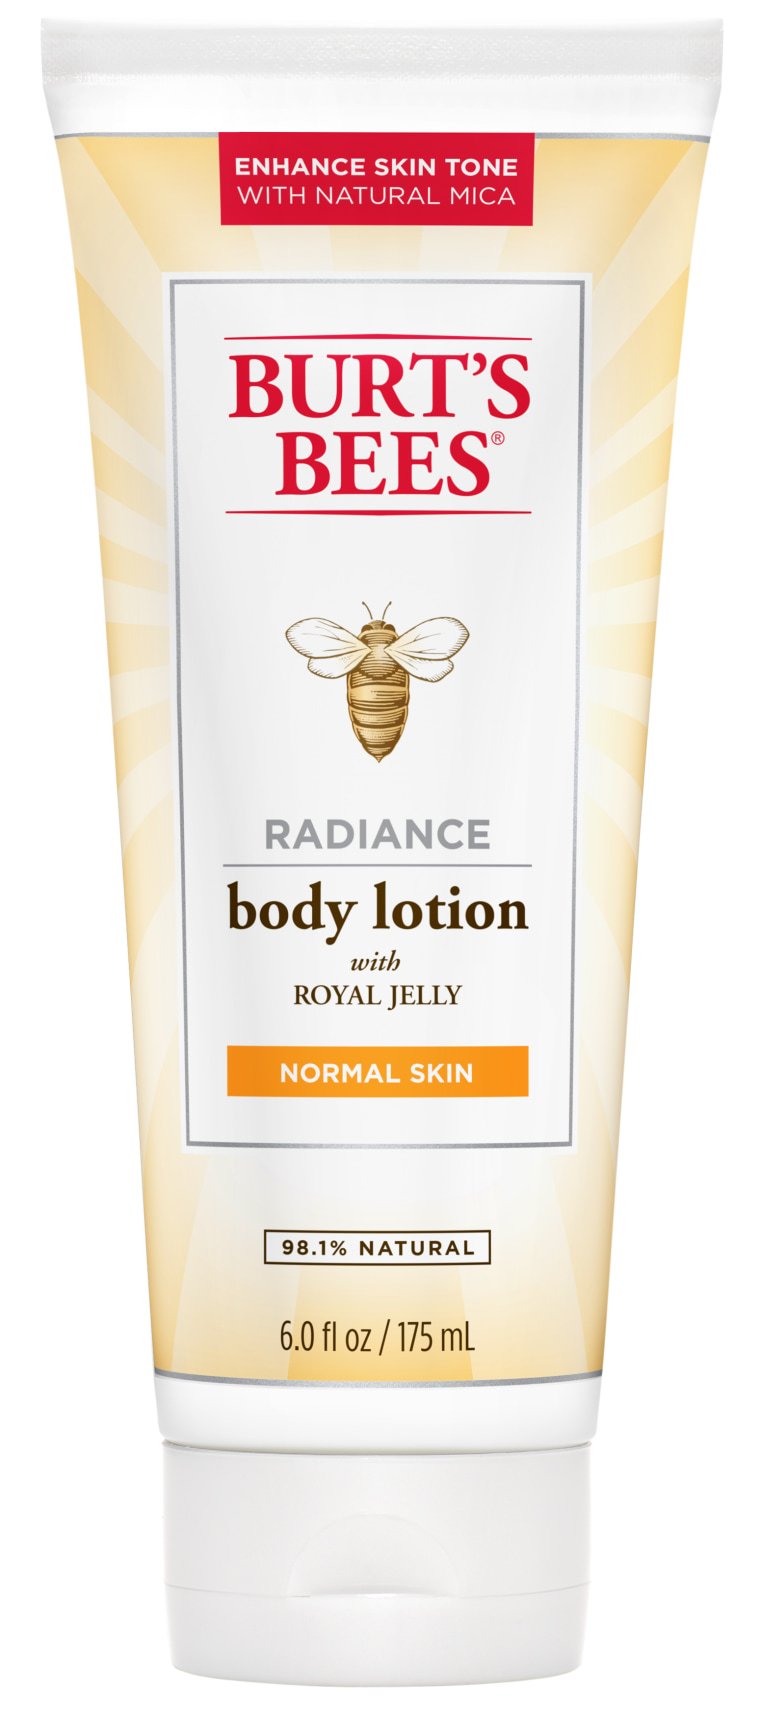 Burt's Bees Radiance Body Lotion